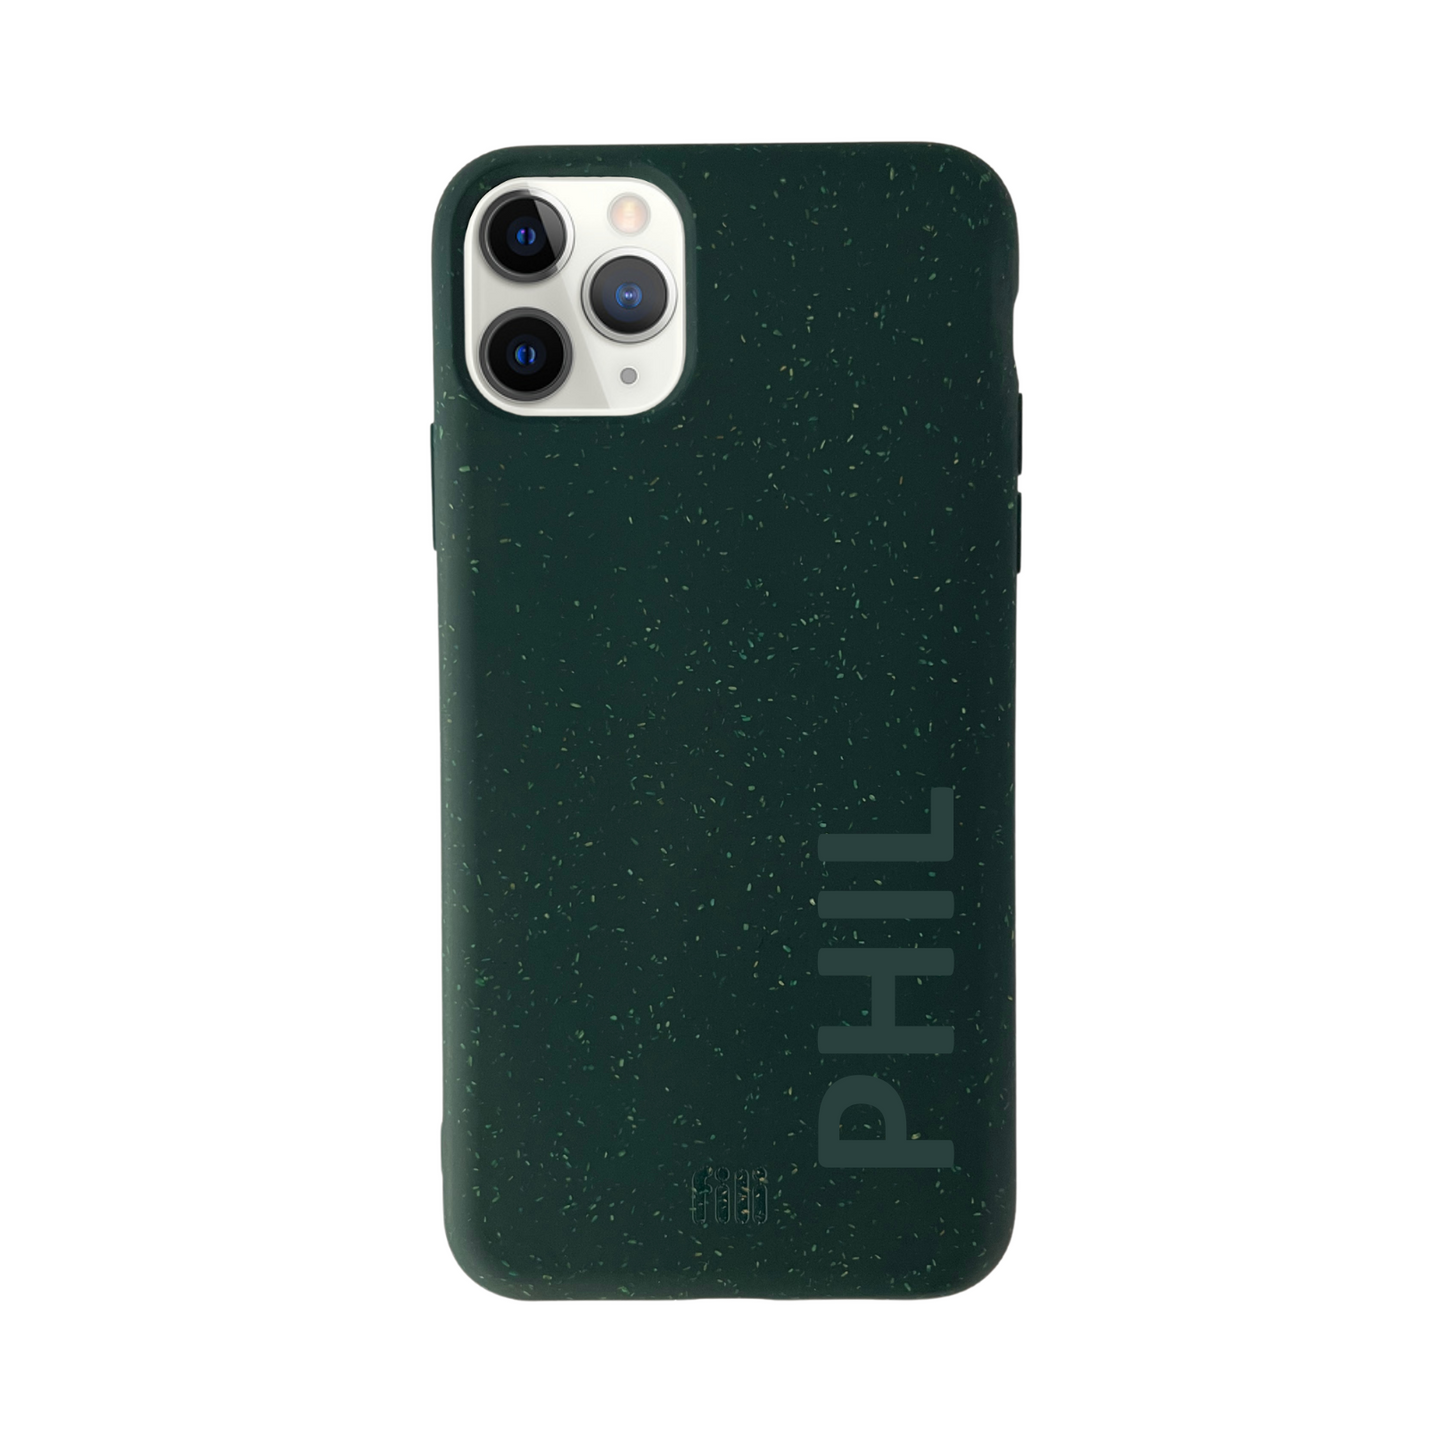 FILI Custom Biodegradable Smooth iPhone 11 Pro Max Case